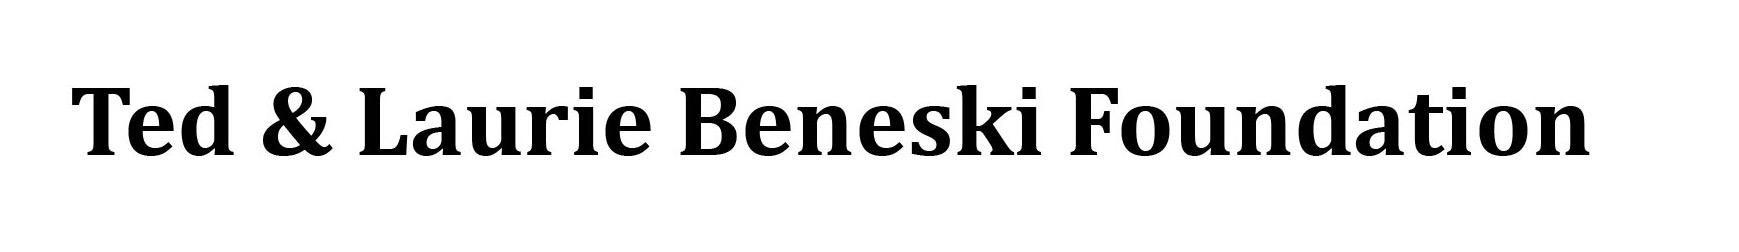 Beneski logo 2021 modified